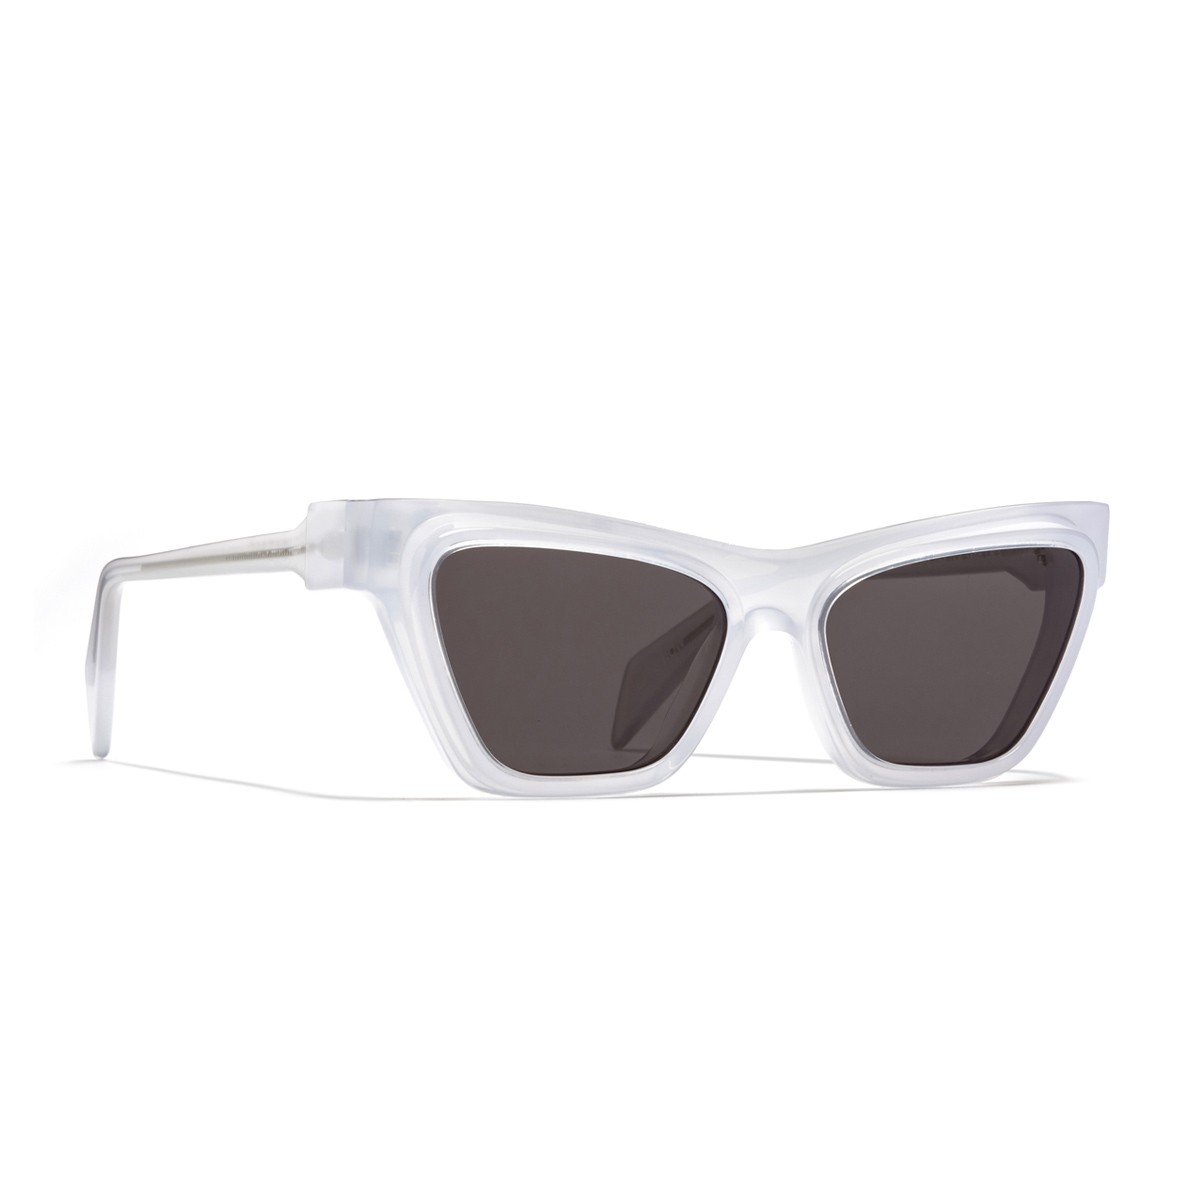 Siens Eye code 054 | Women's sunglasses